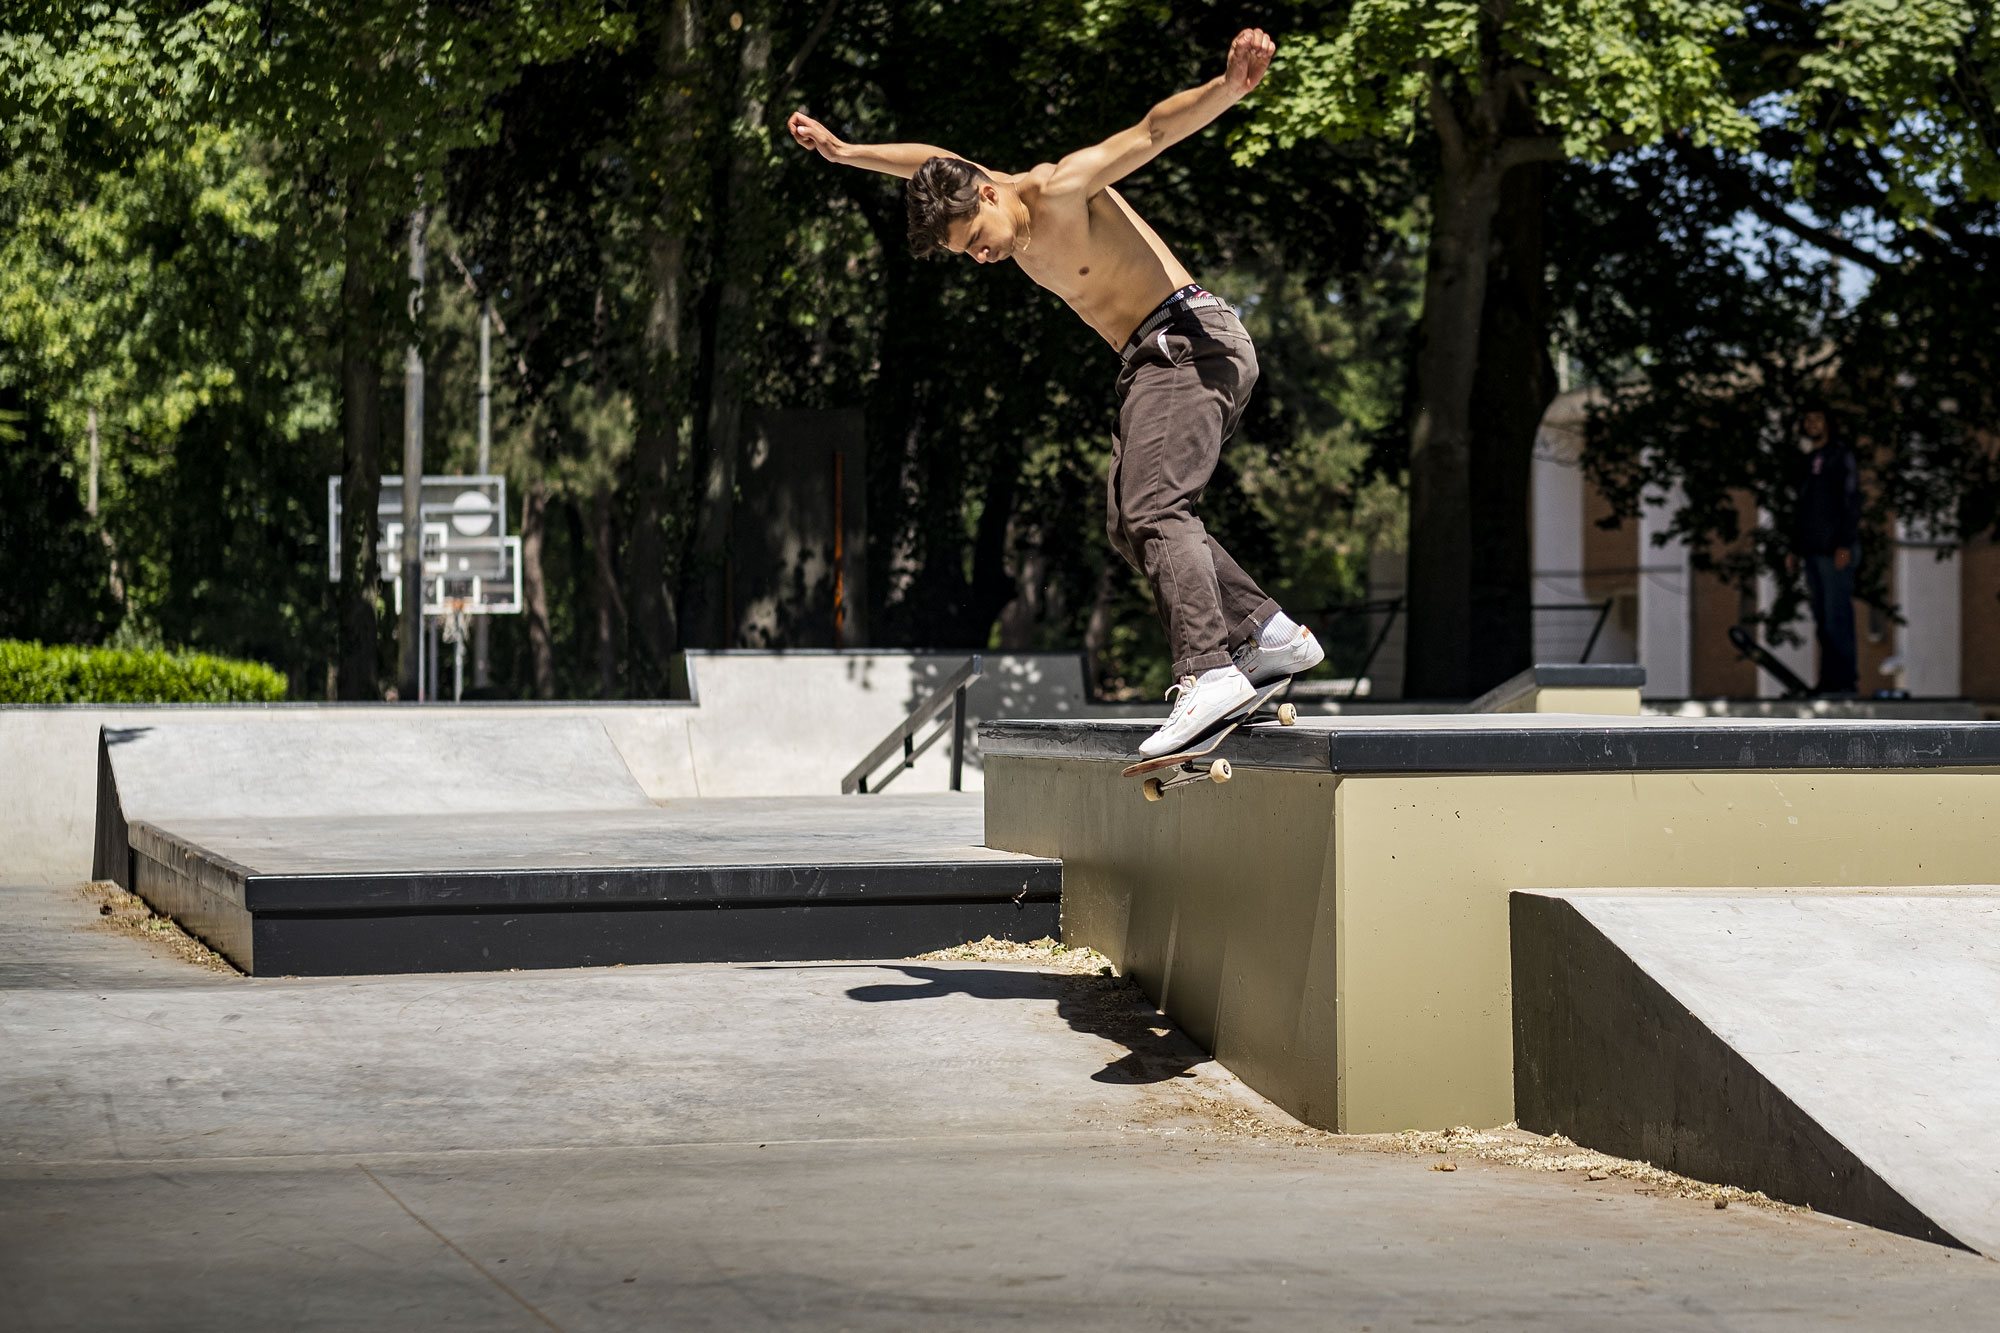 Back Smith by Jay de Keijzer at Skatepark Diest. Photo: Mathijs Tromp